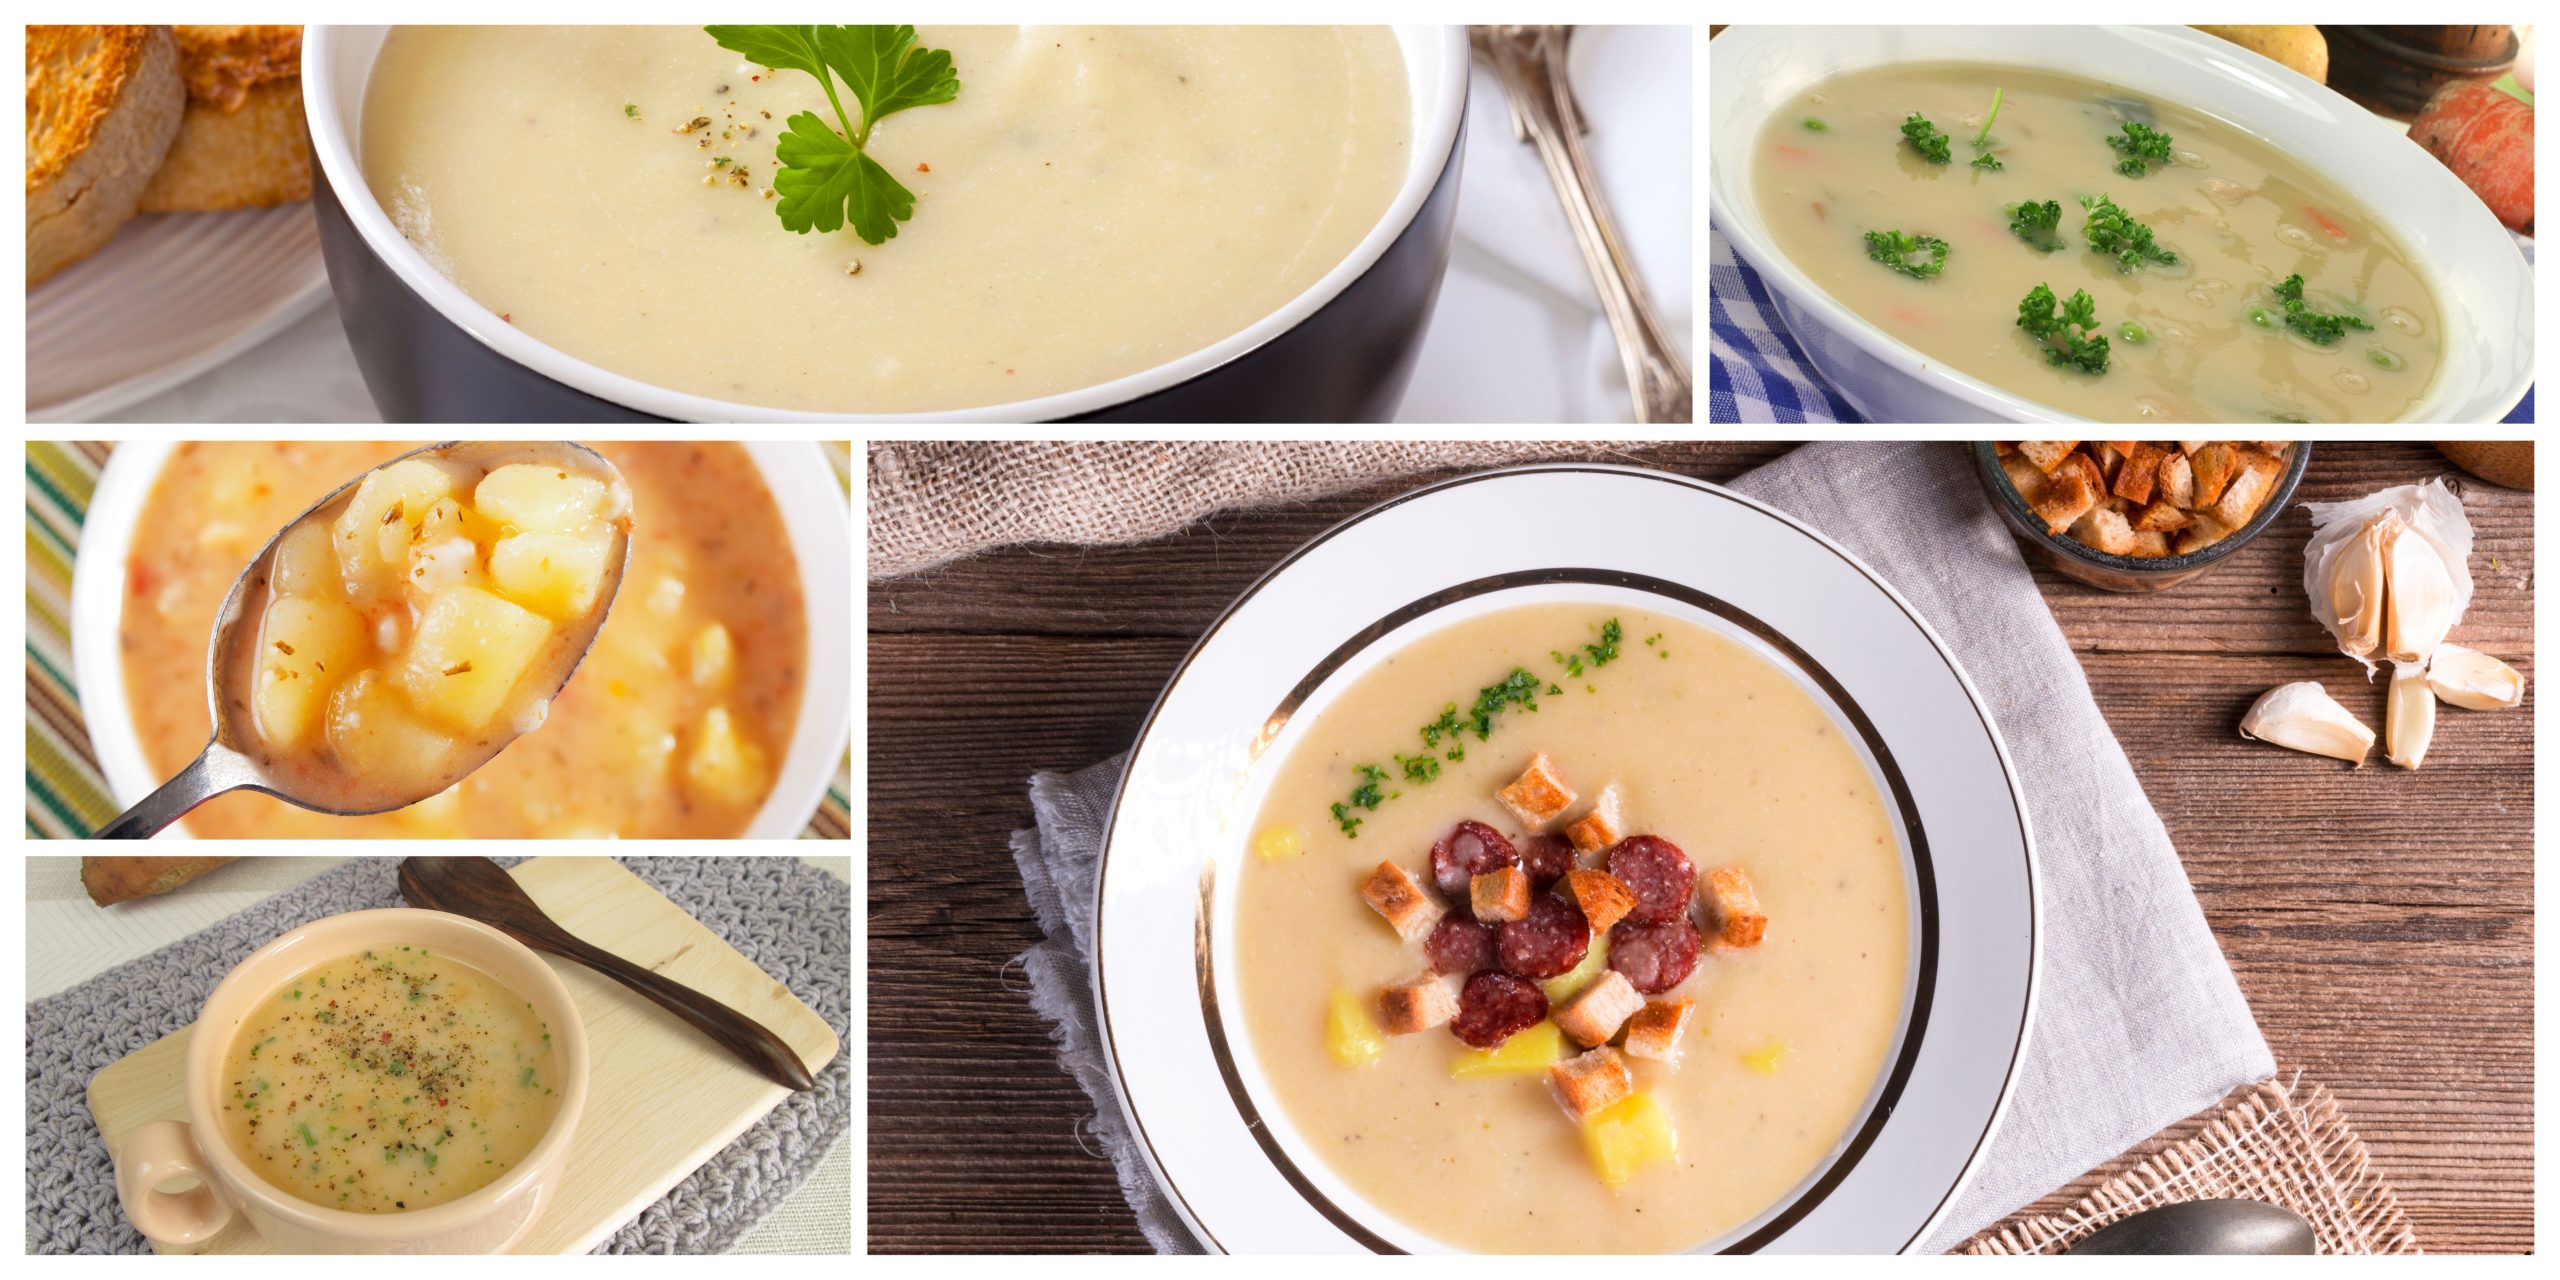 Serving suggestion for potato soup creamy ideas for dinner Reis en Huis